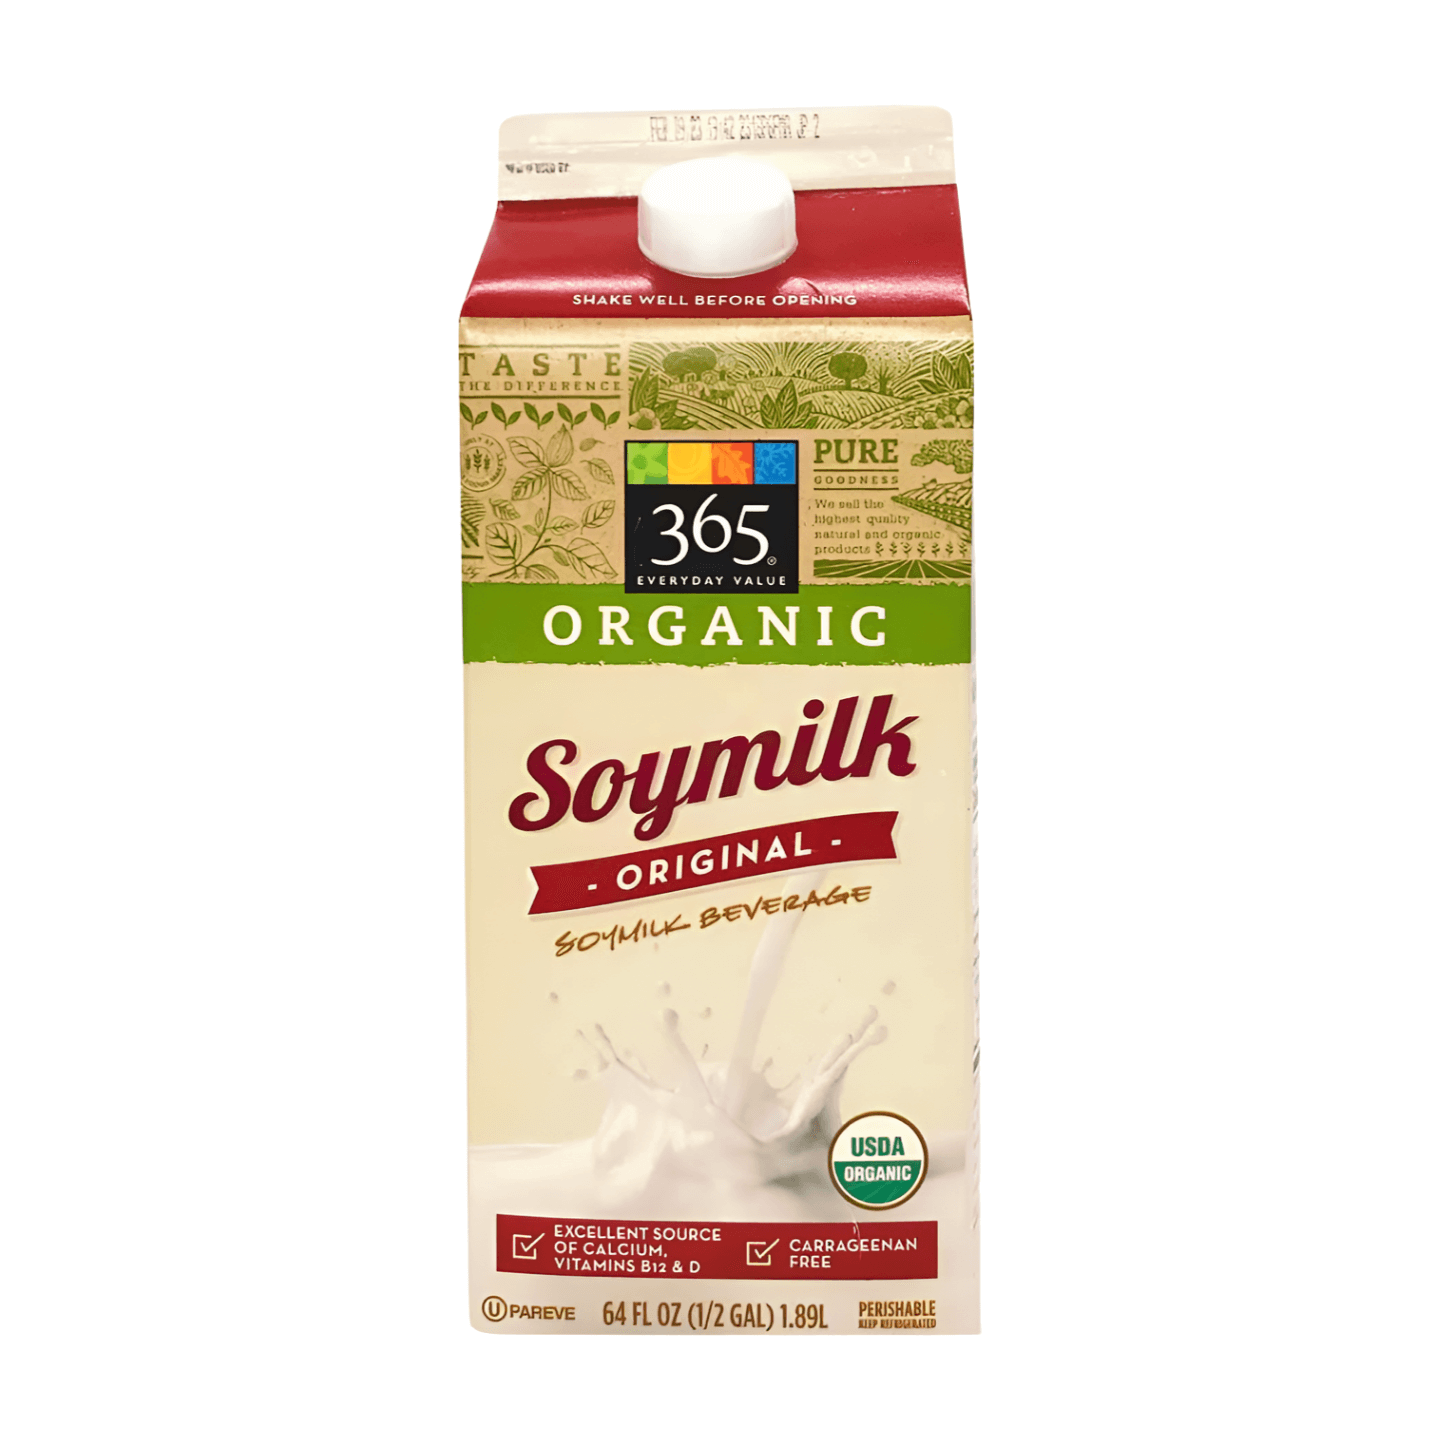 Wholefoods 365 Organic Soymilk Original